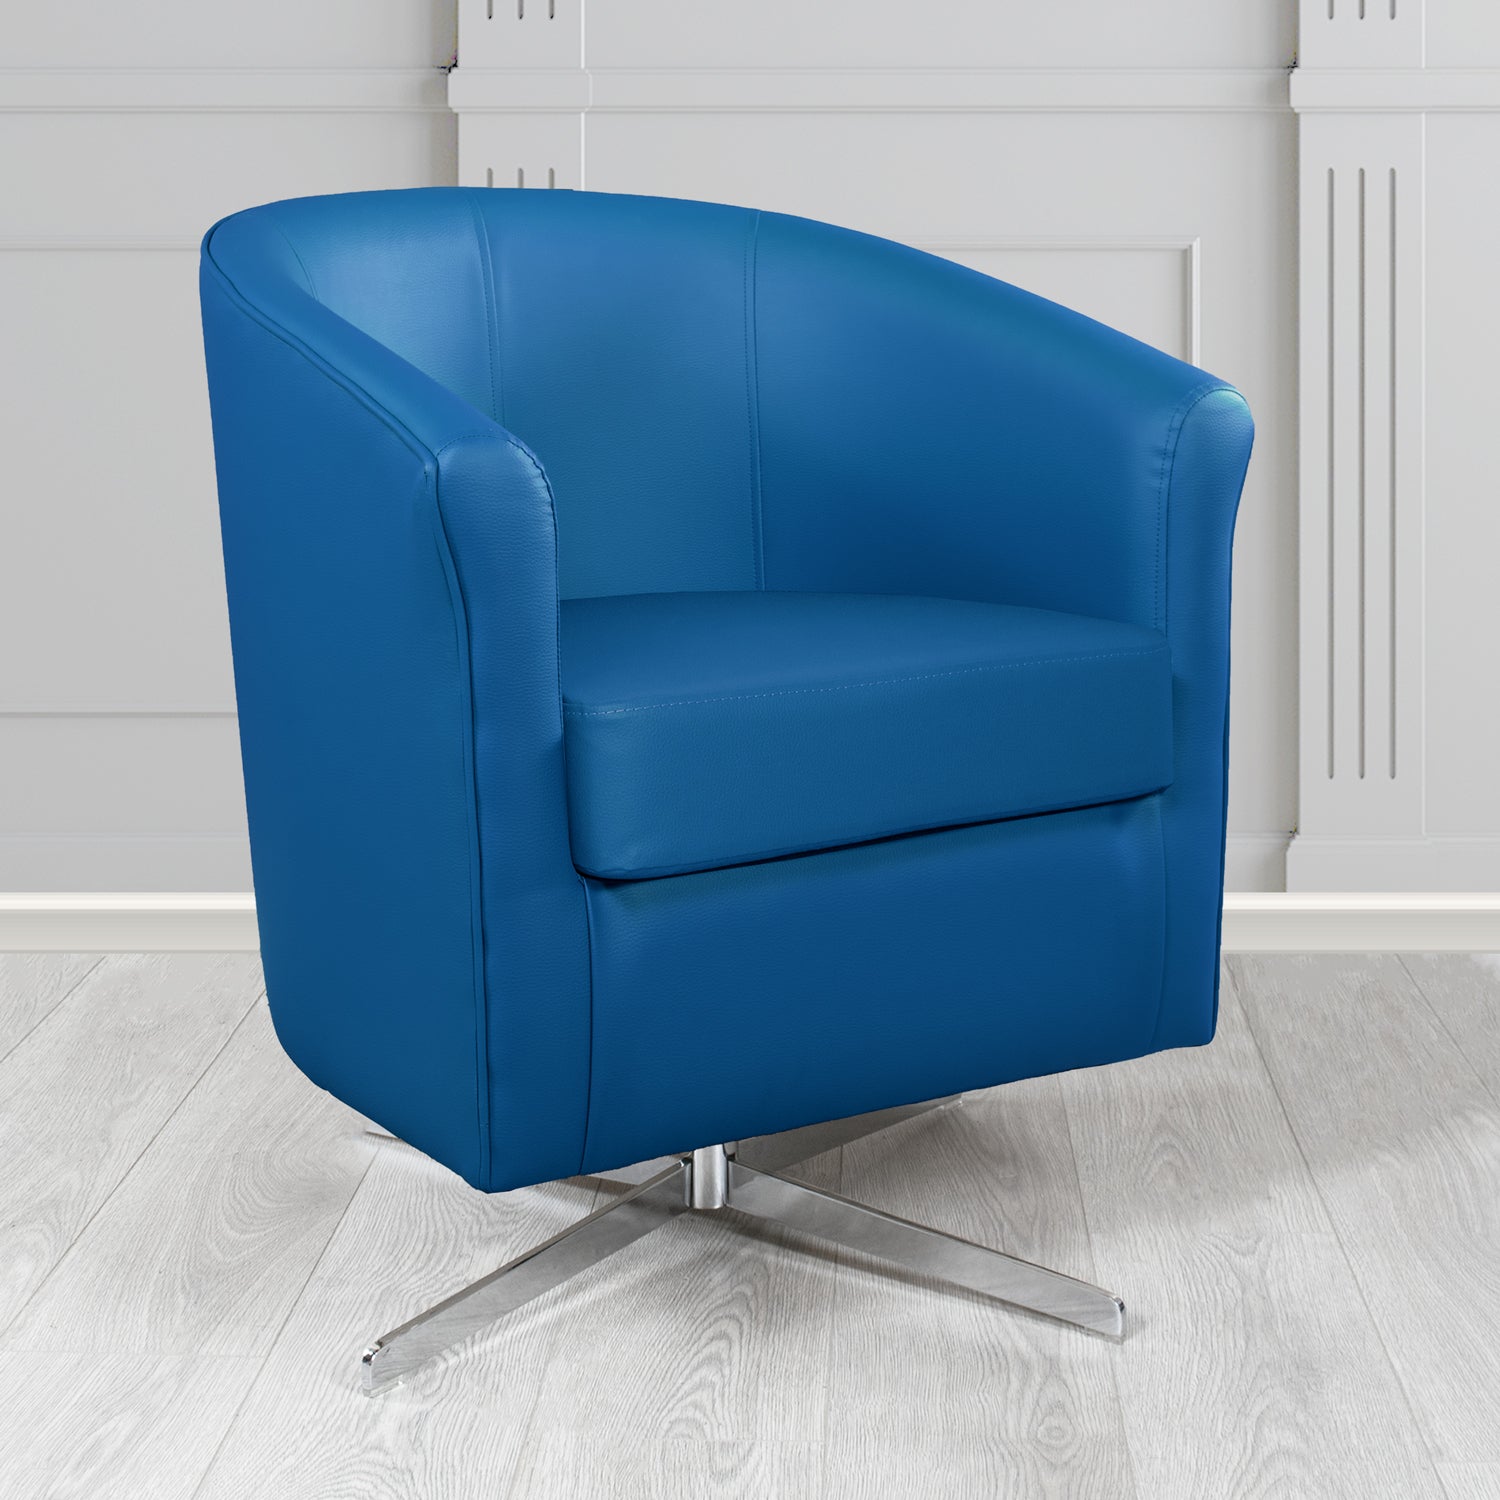 Cannes Swivel Tub Chair in Just Colour Ocean Blue Crib 5 Faux Leather - The Tub Chair Shop